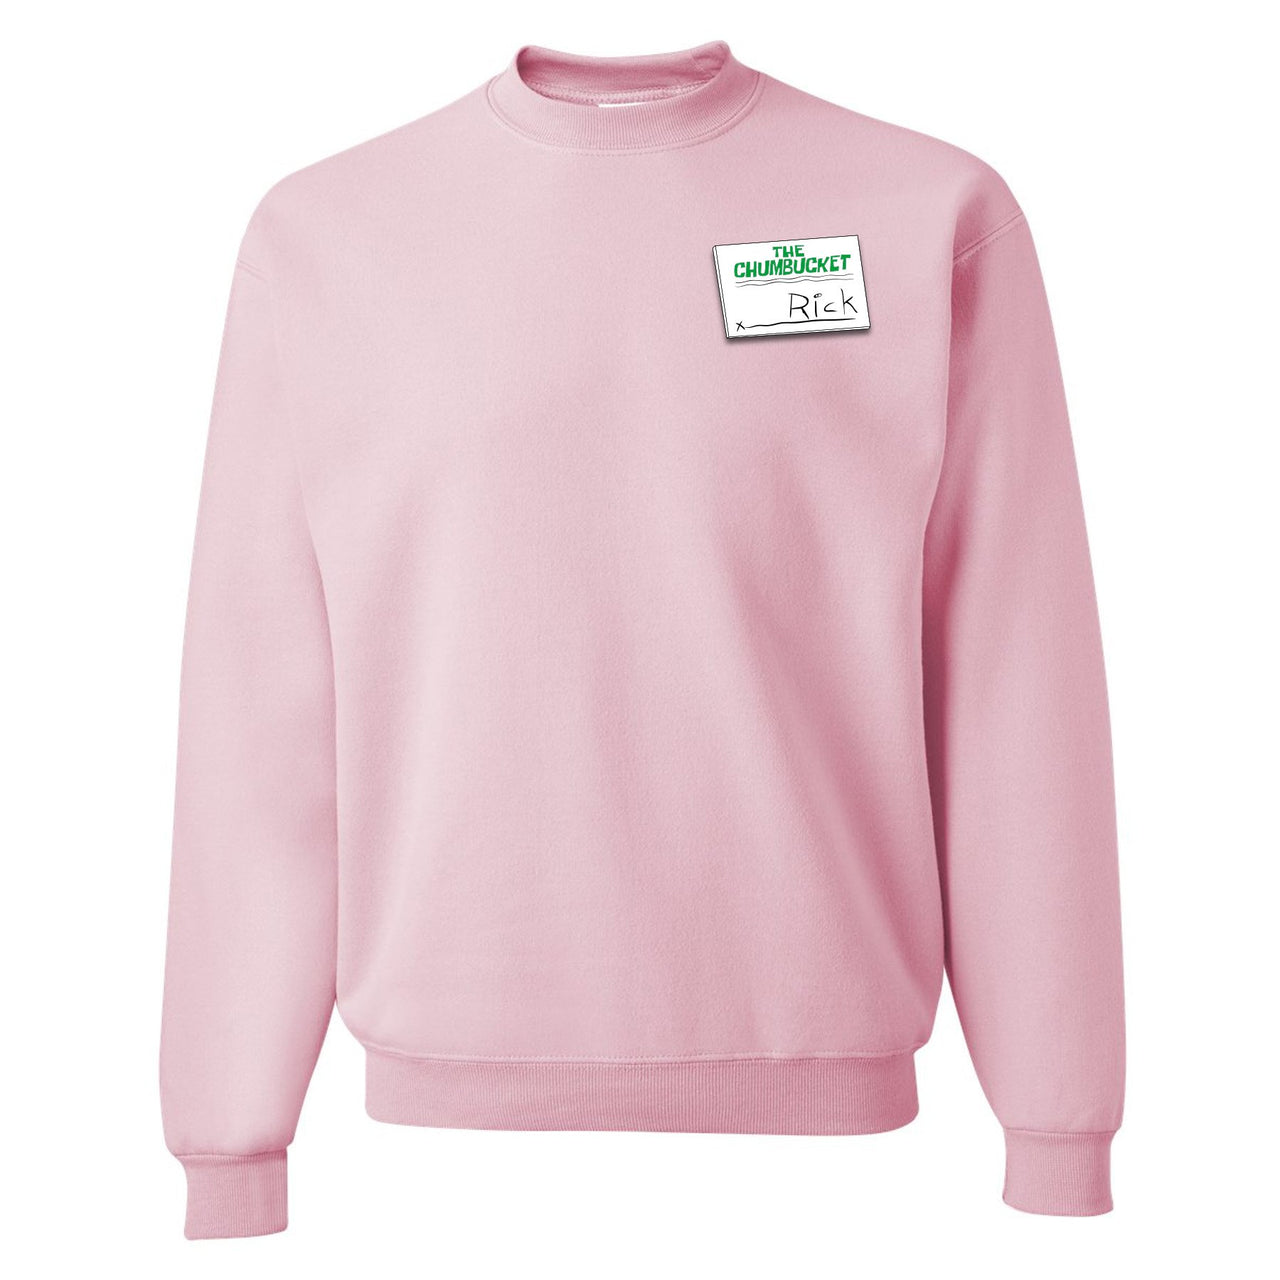 Patrick K5s Sweater | Rick, Light Pink